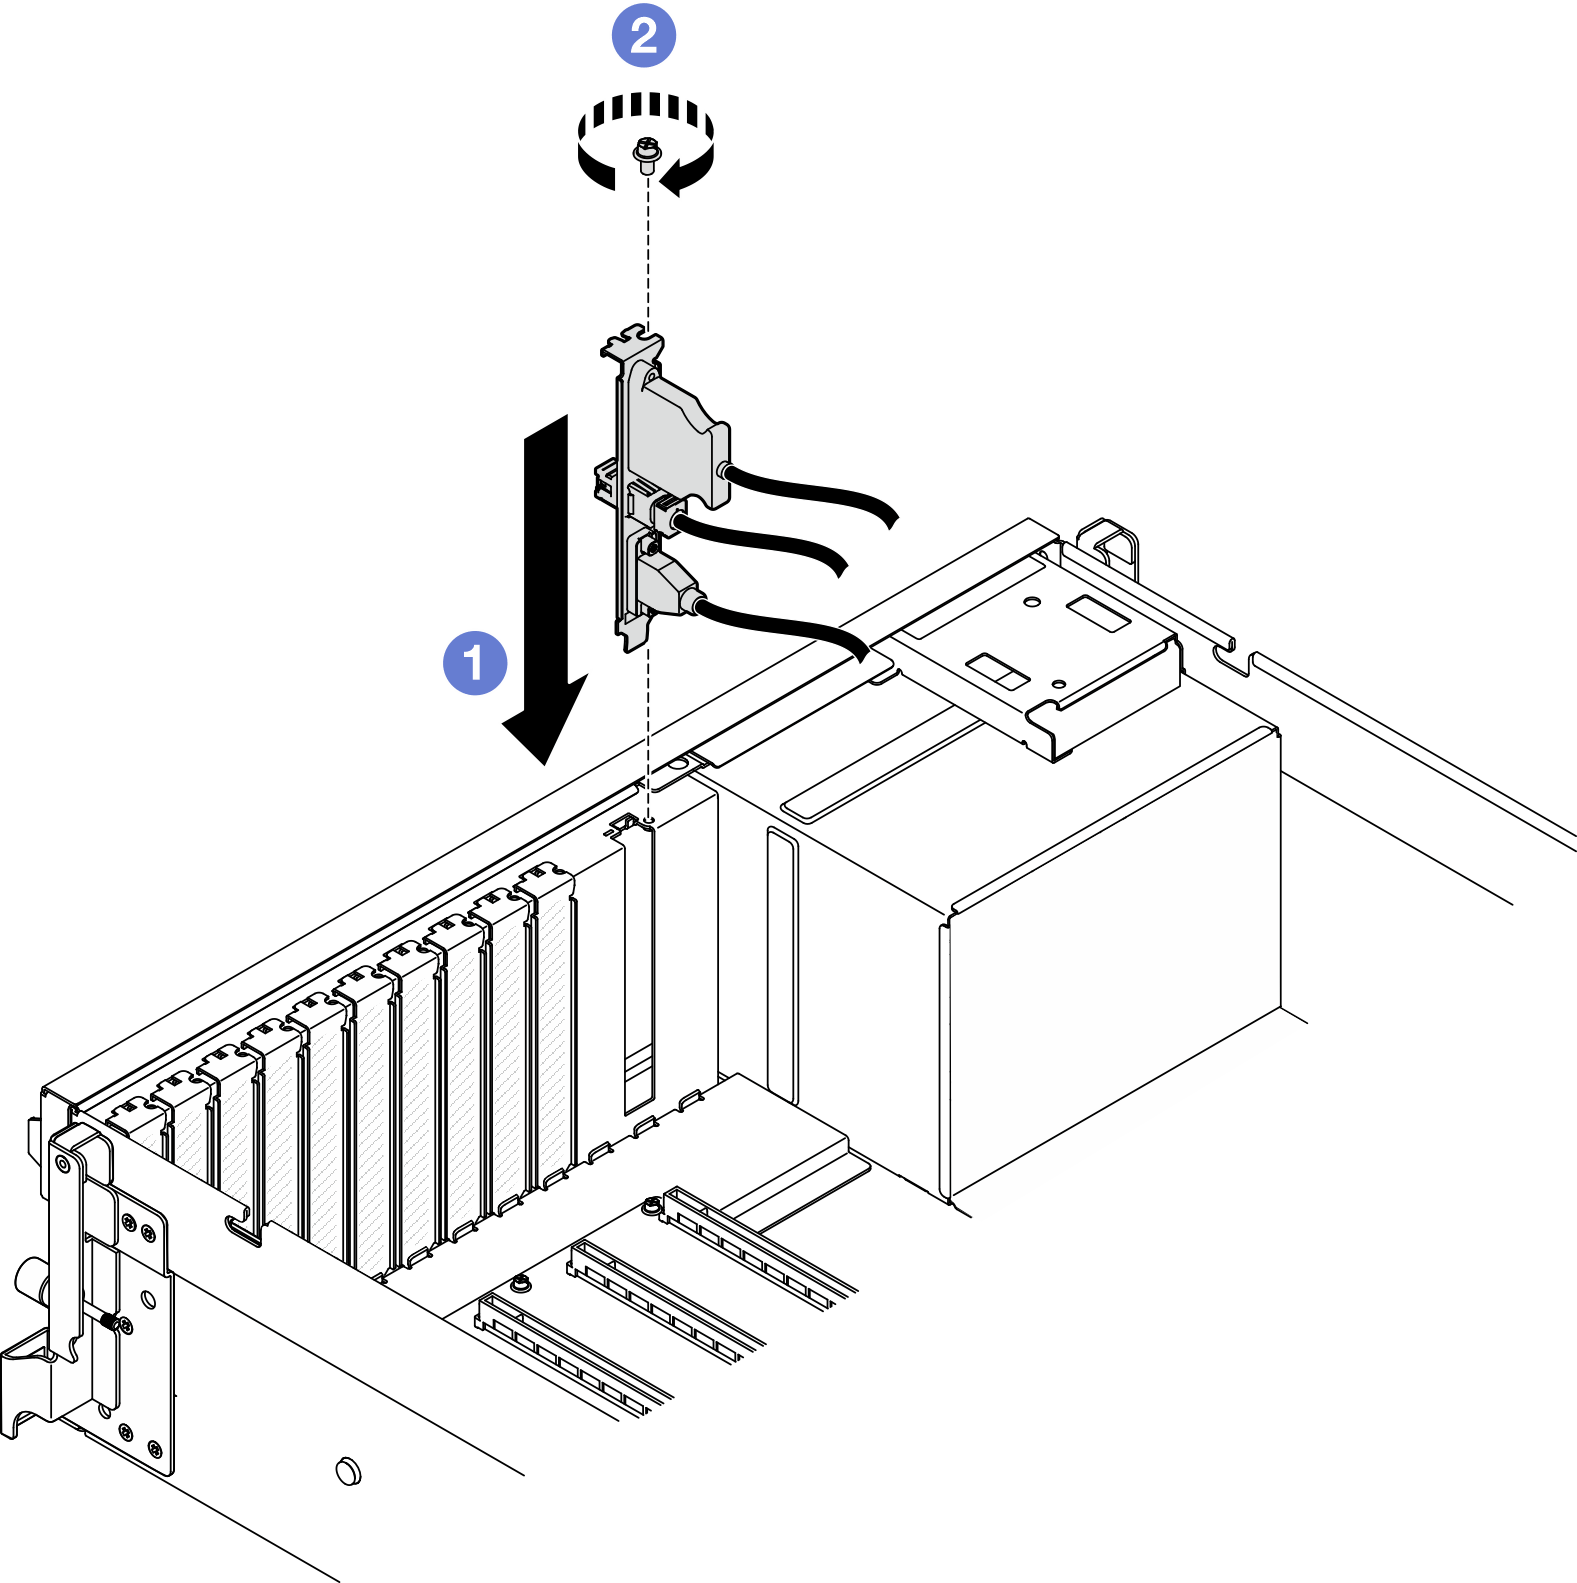 Front I/O module installation